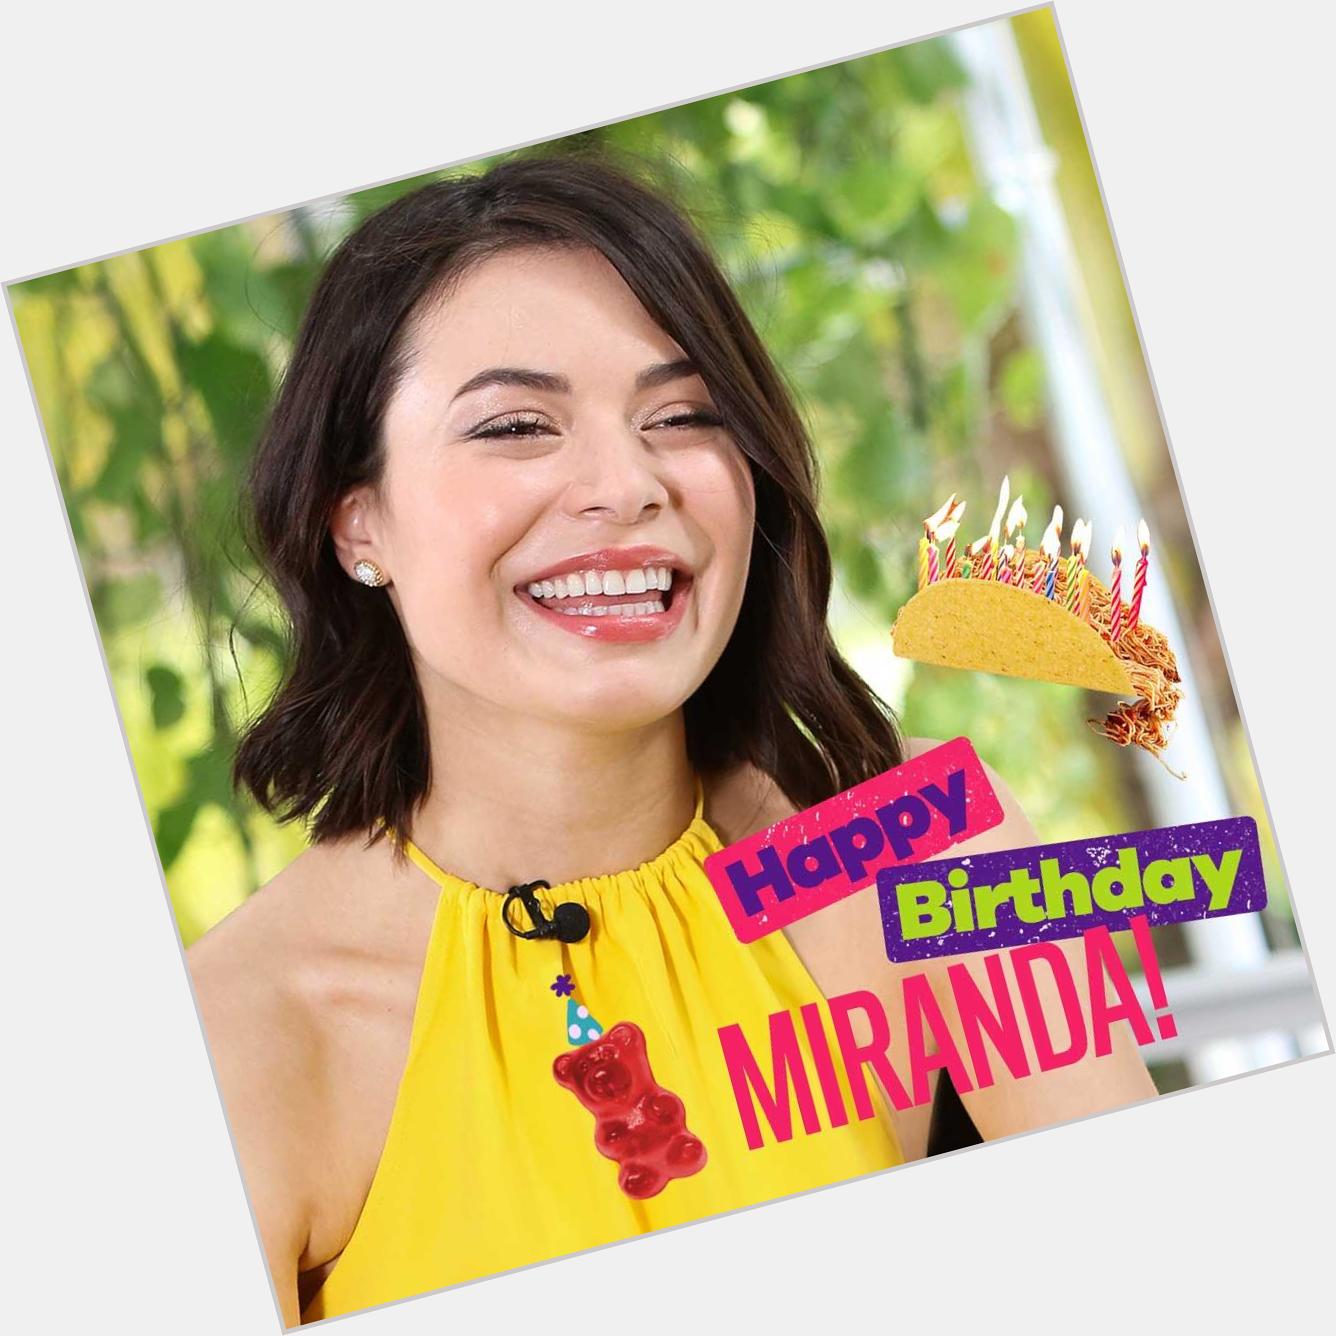 Happy Birthday to the amazing Miranda Cosgrove!  